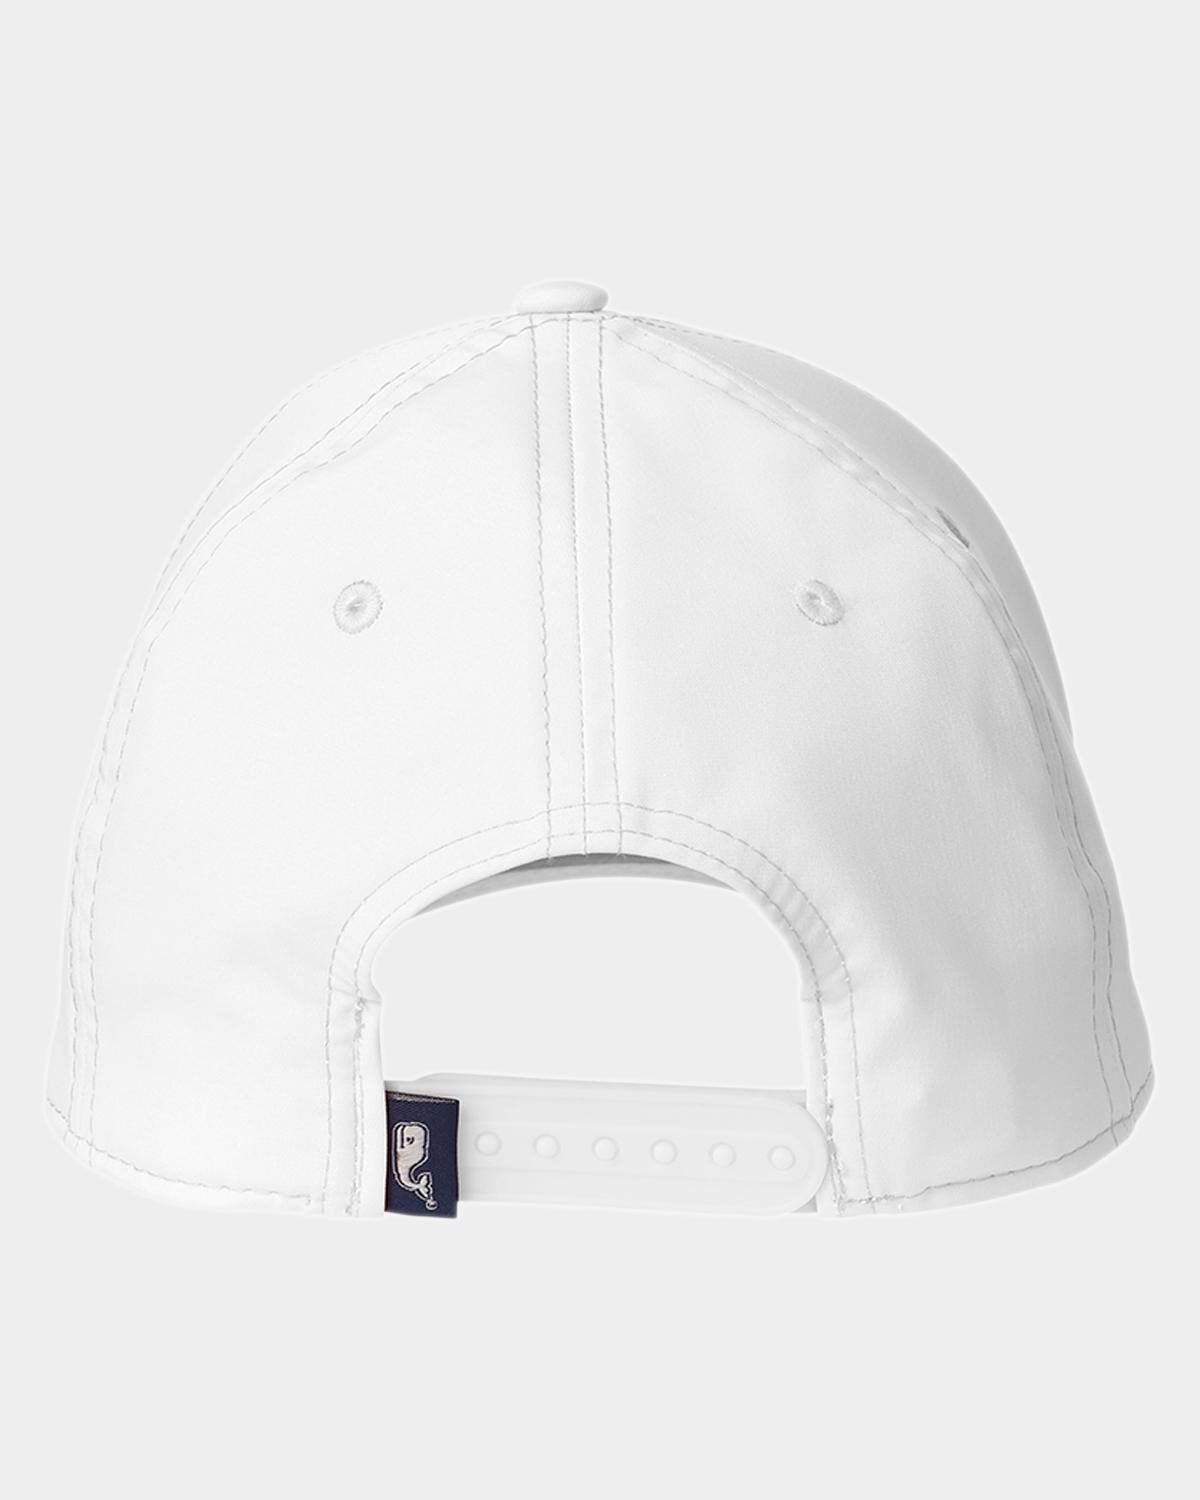 Vineyard Vines Custom Performance Baseball Hats, White Cap